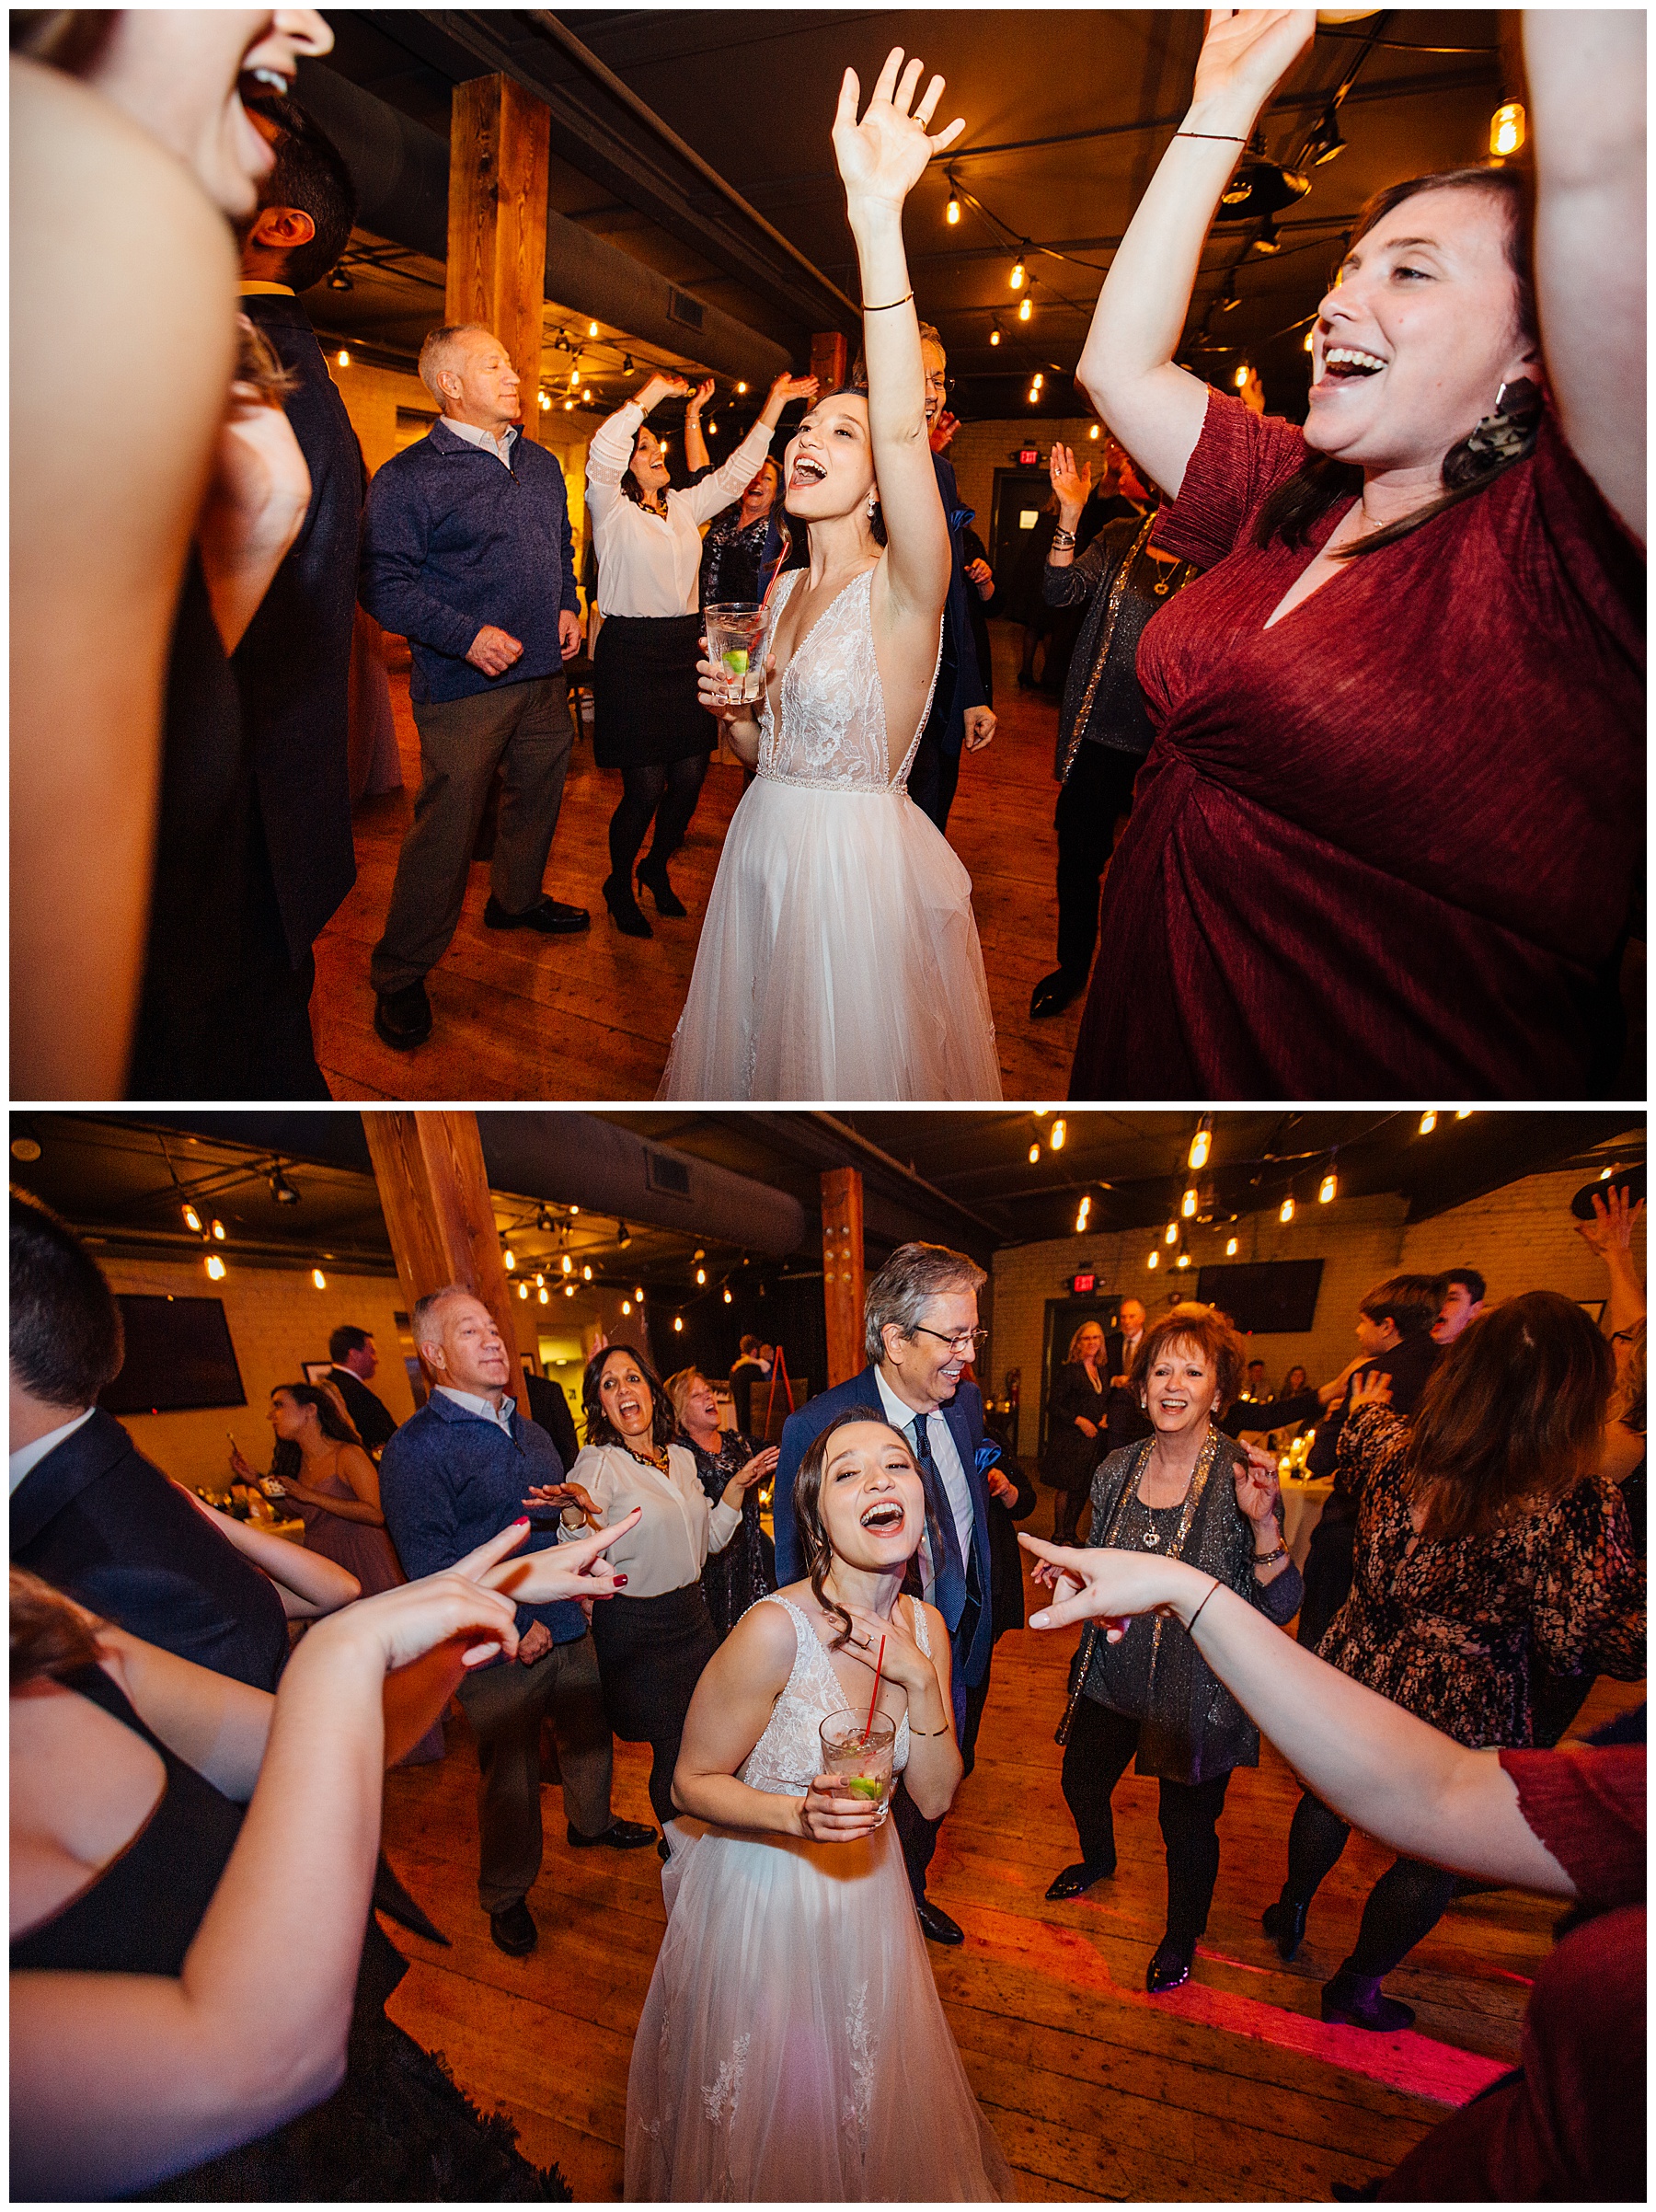 Dancing at Old Mattress factory wedding reception